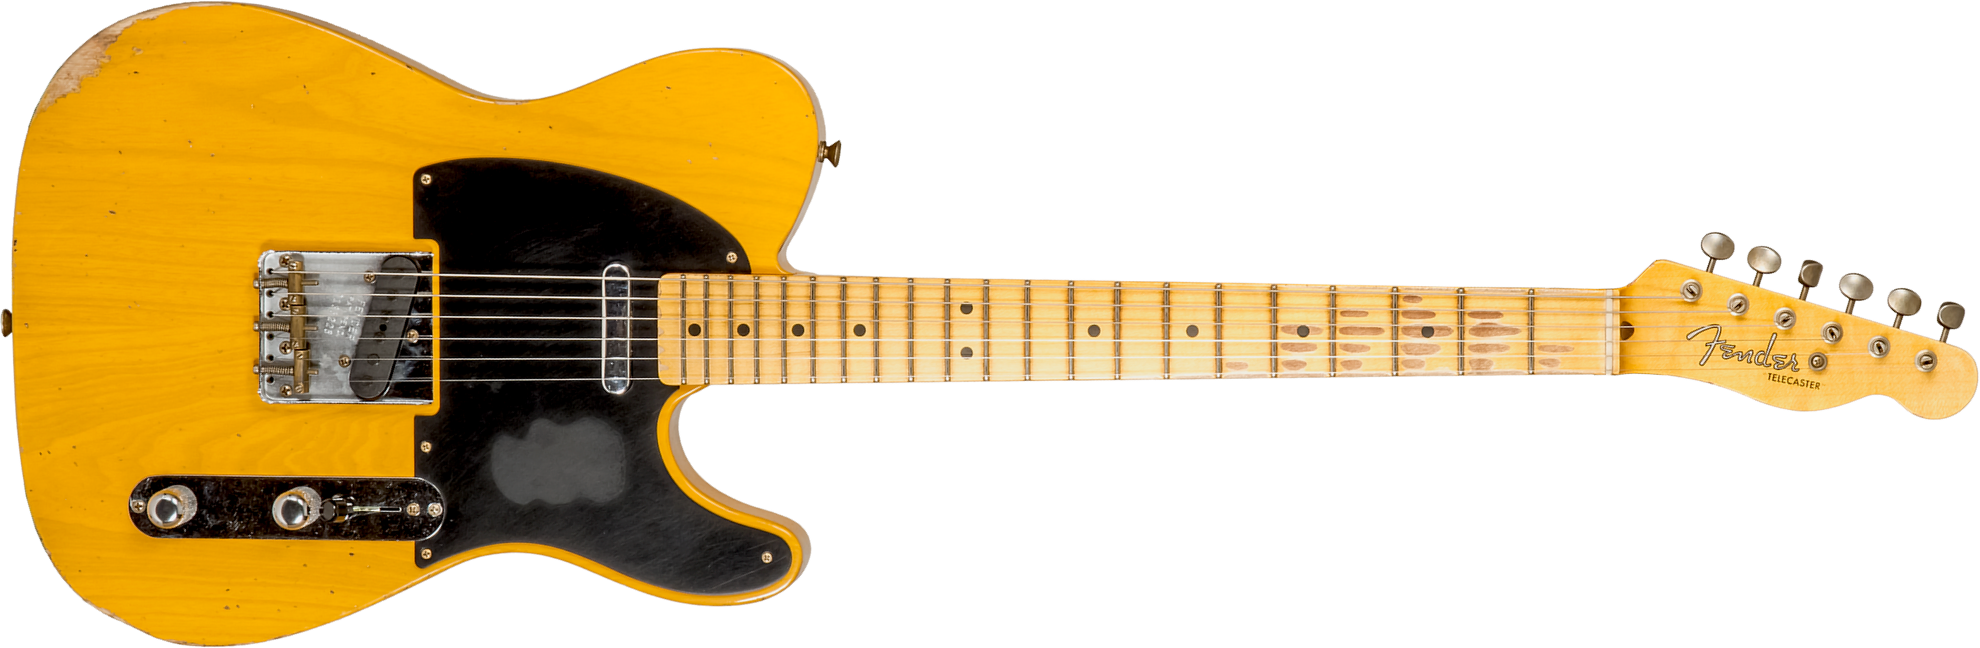 Fender Custom Shop Tele 1952 2s Ht Mn #r135225 - Relic Aged Buttercotch Blonde - Televorm elektrische gitaar - Main picture